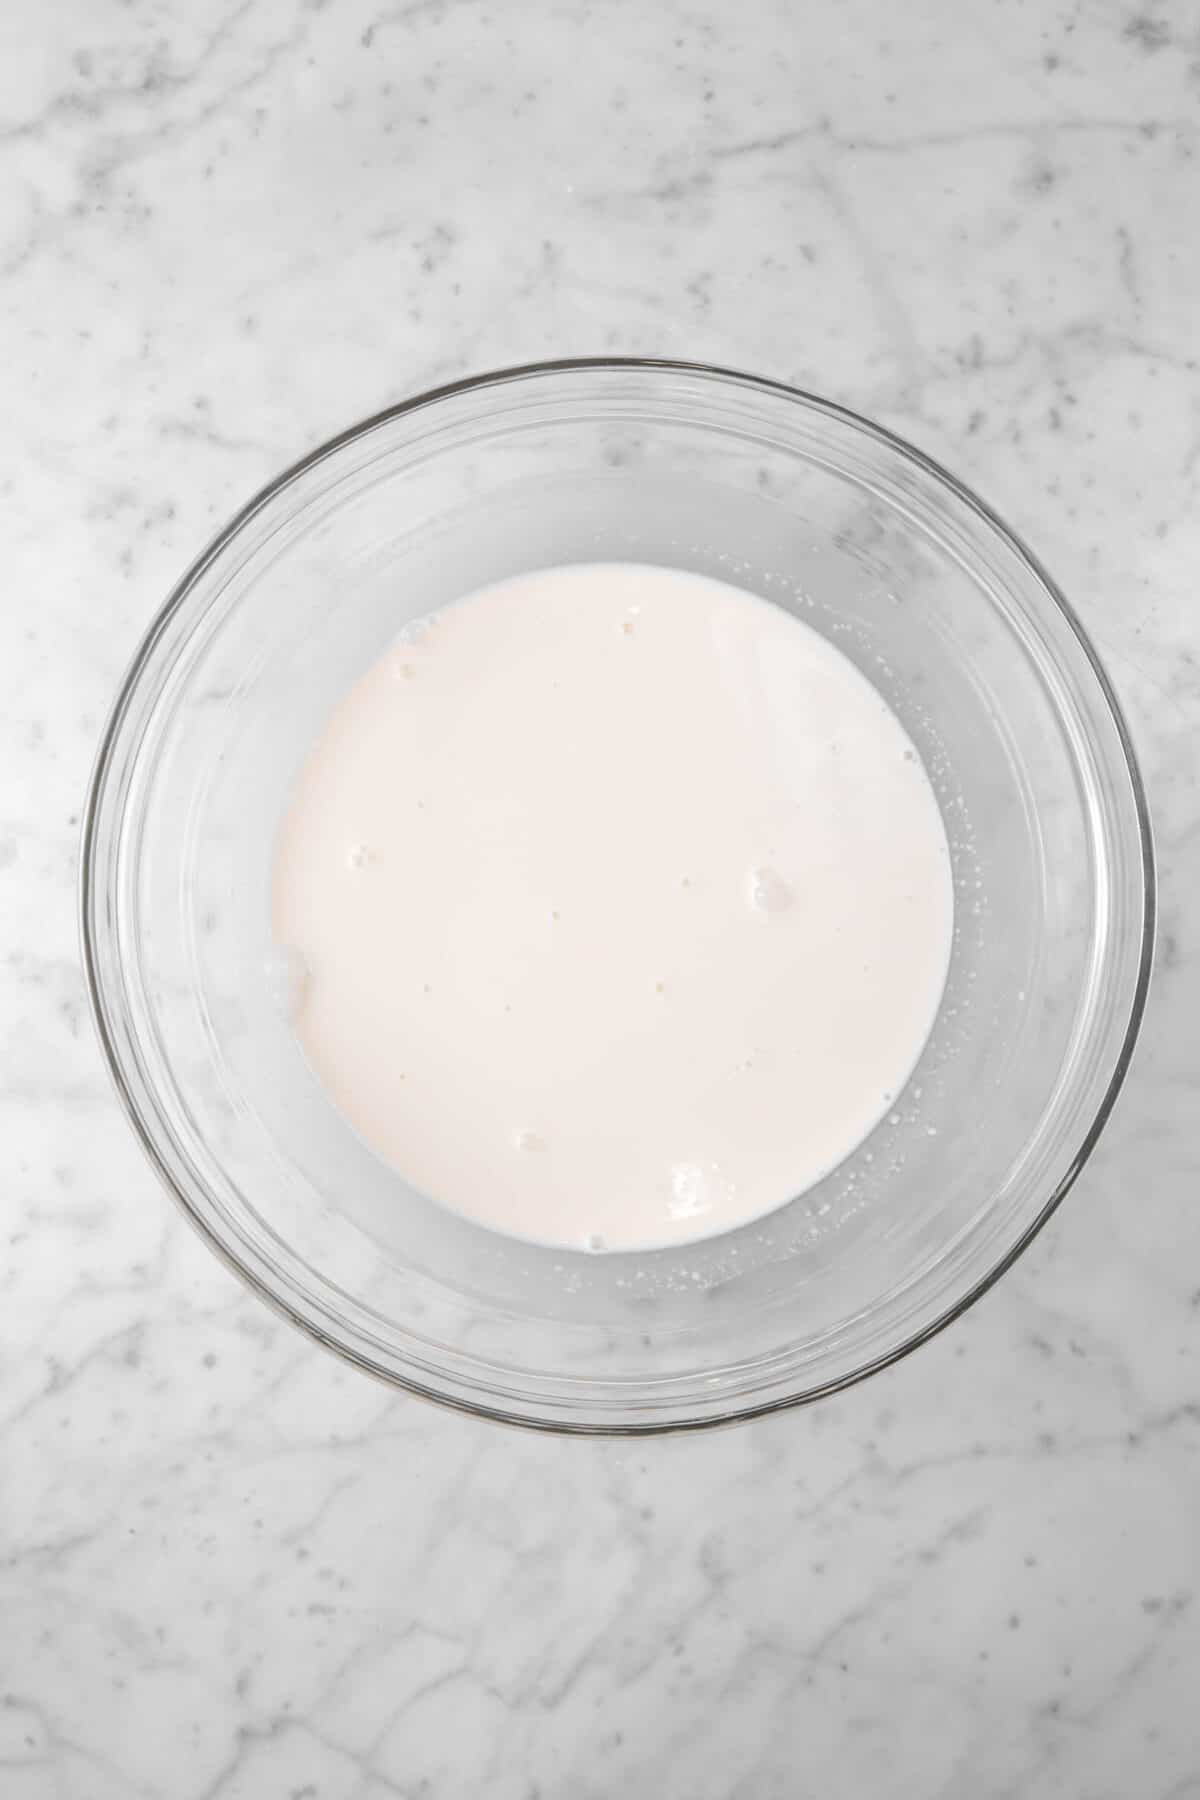 vanilla ice cream base in a glass bowl